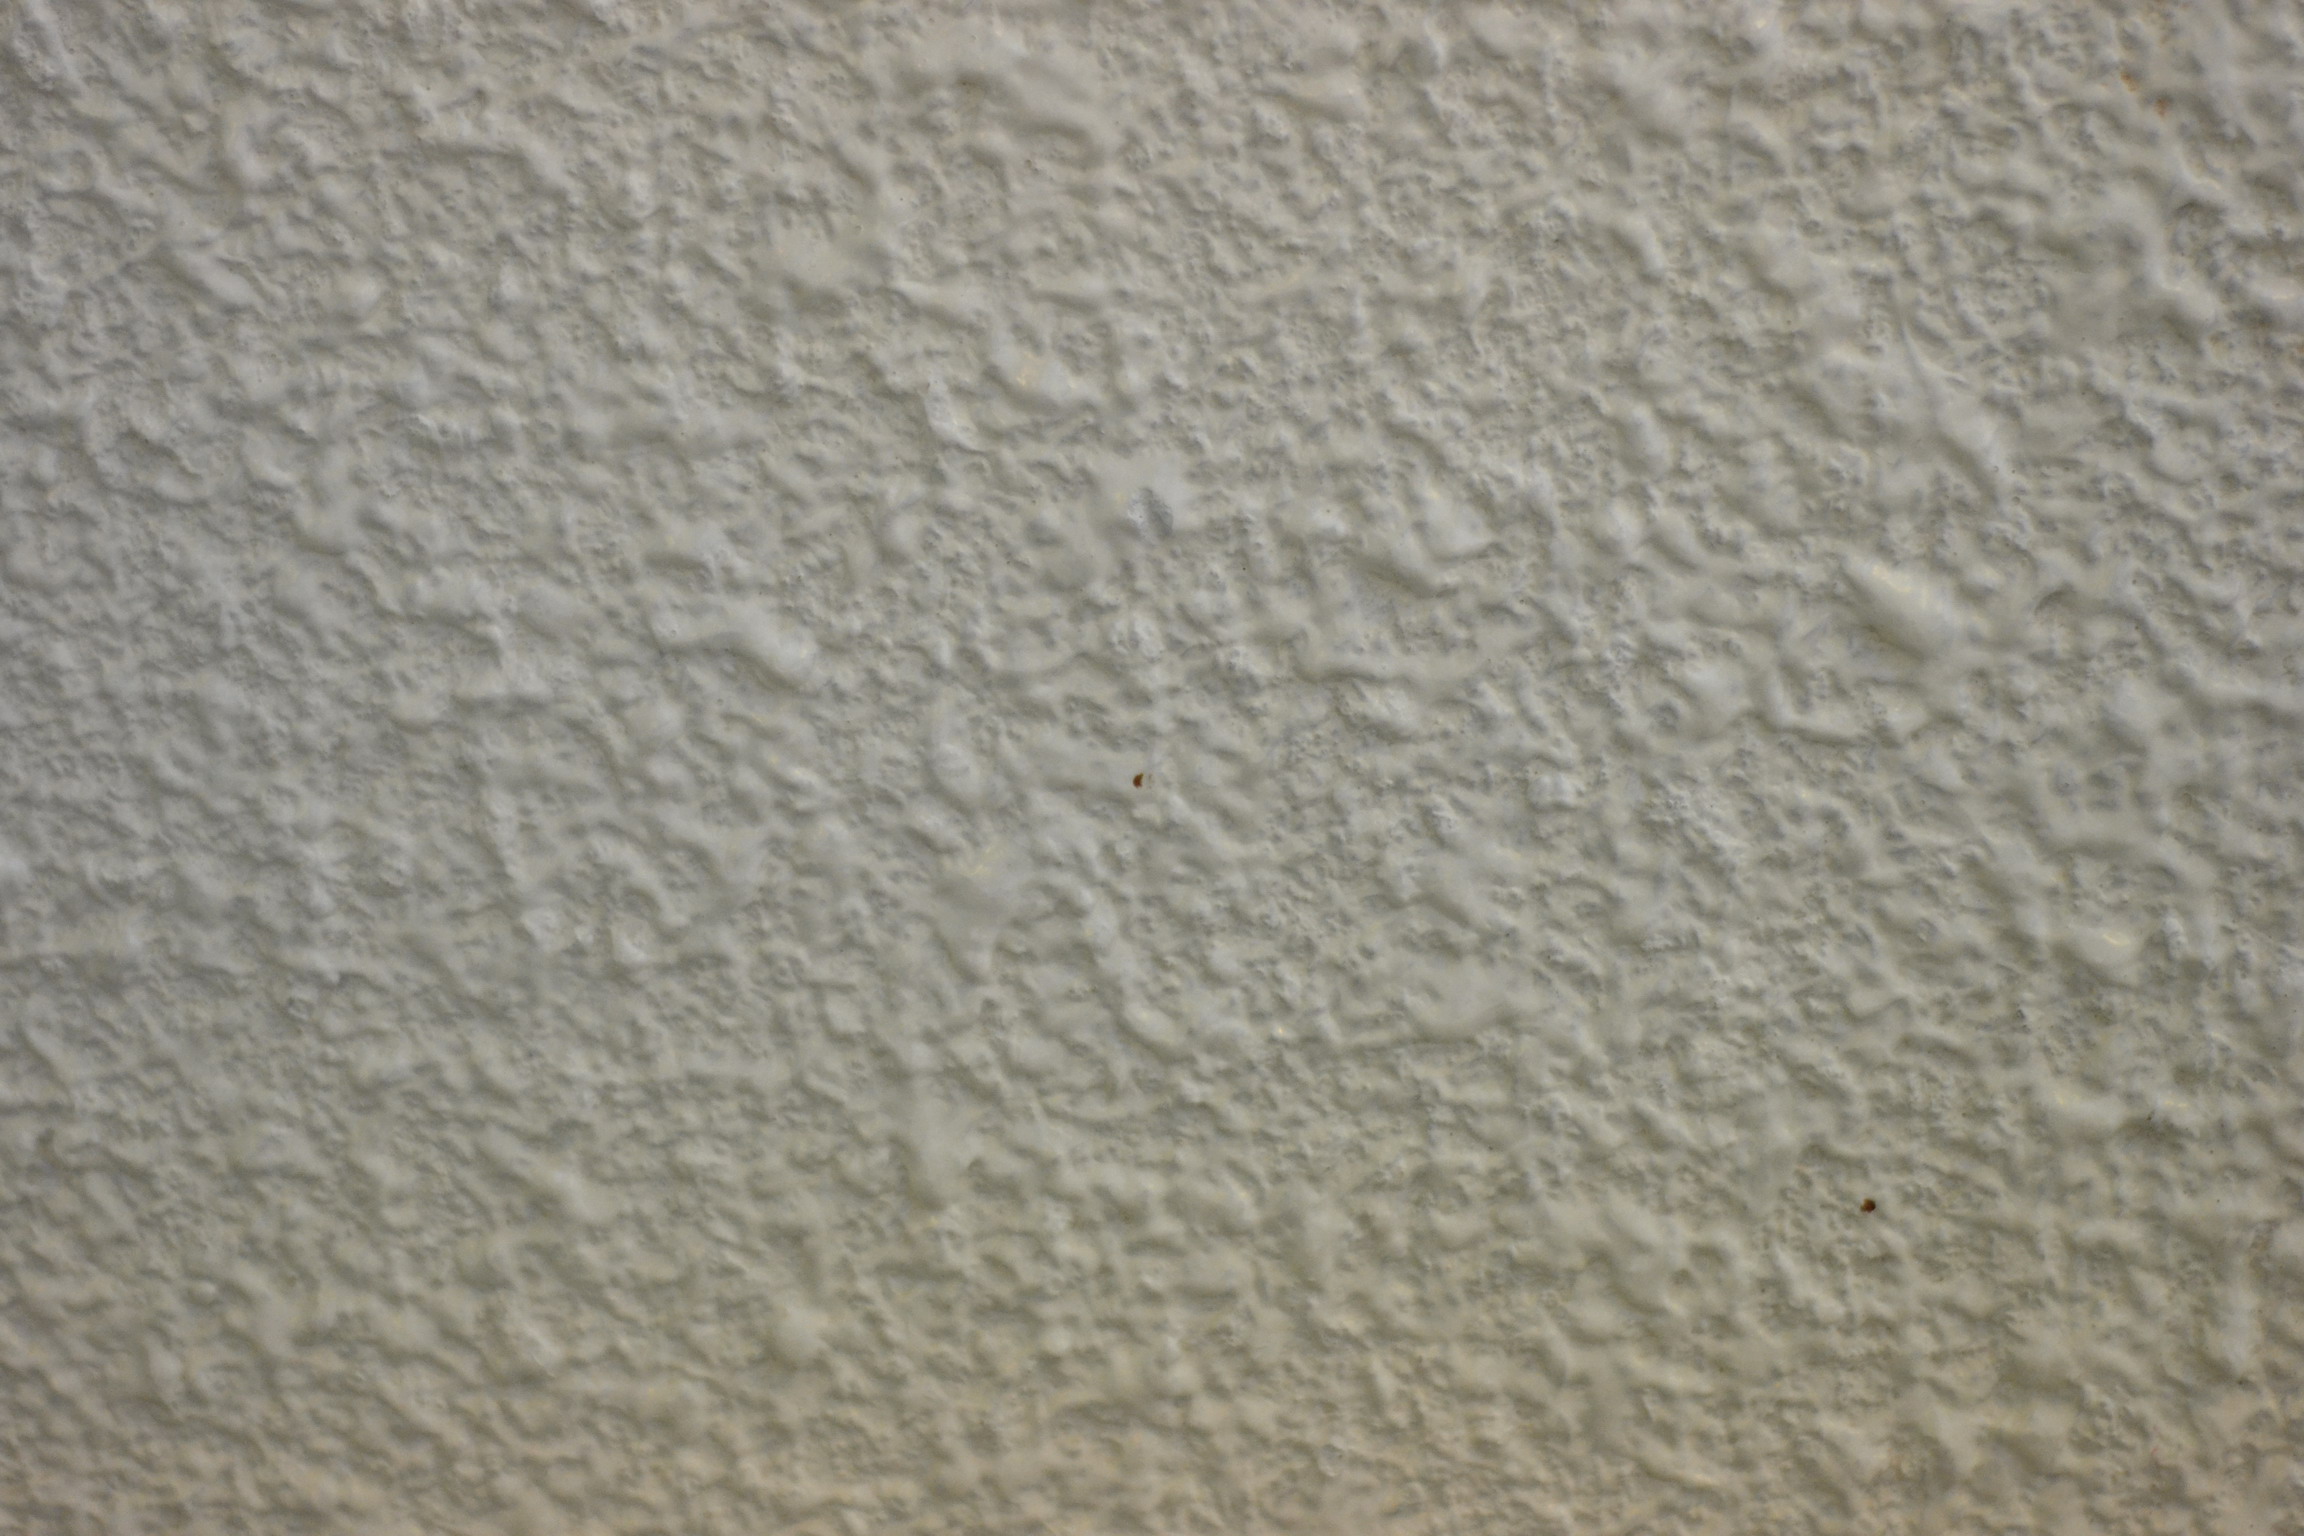 Rough wall texture photo